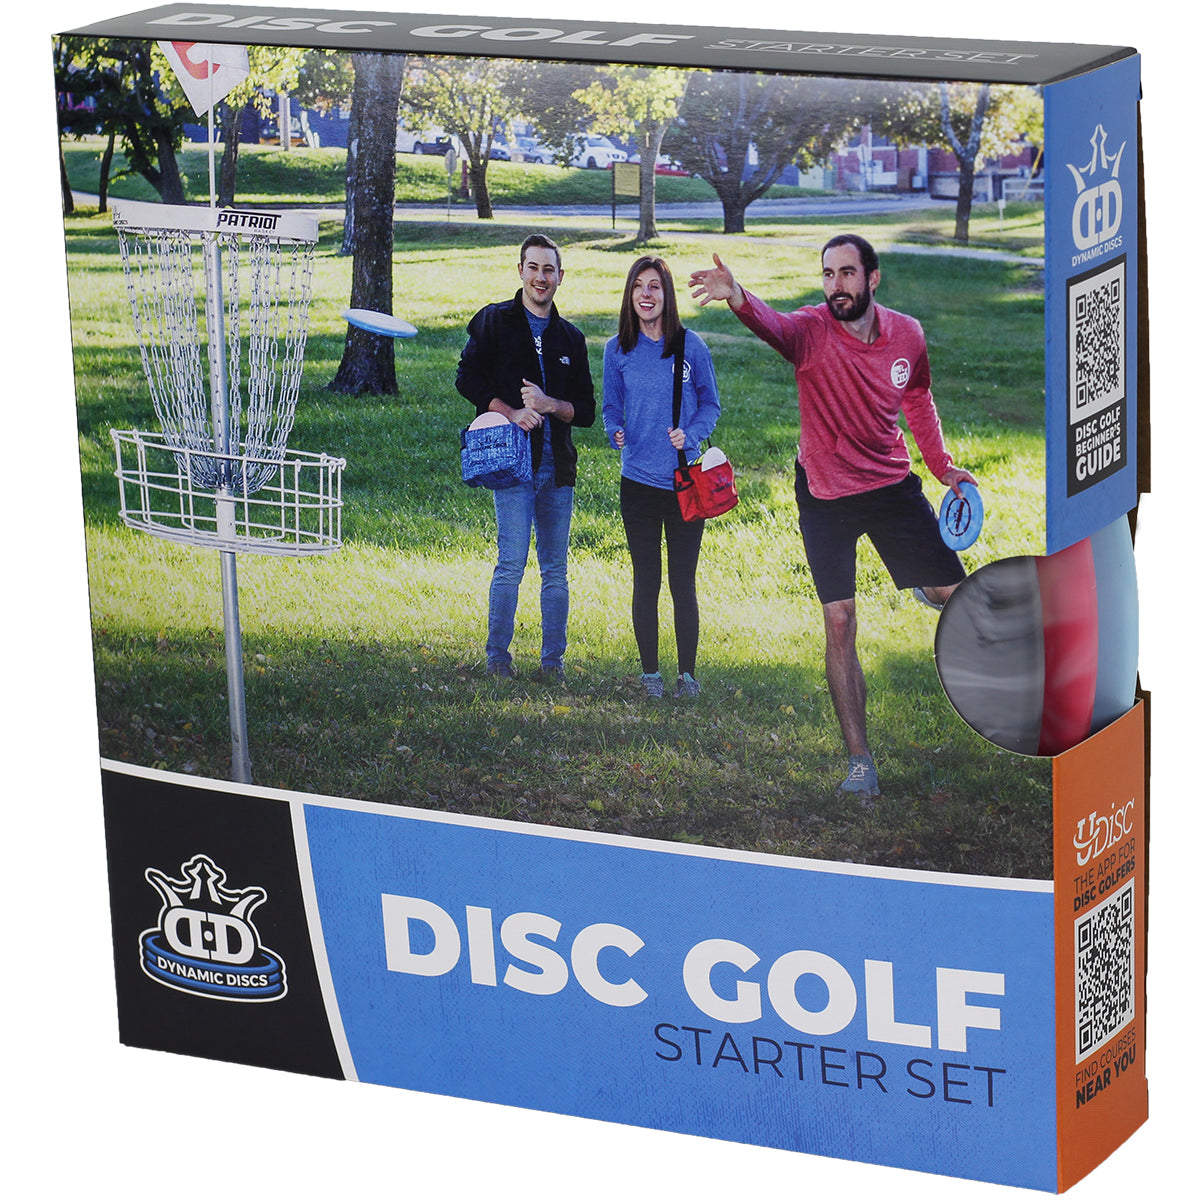 Disc Golf Set – Latitude 64° Factory Store